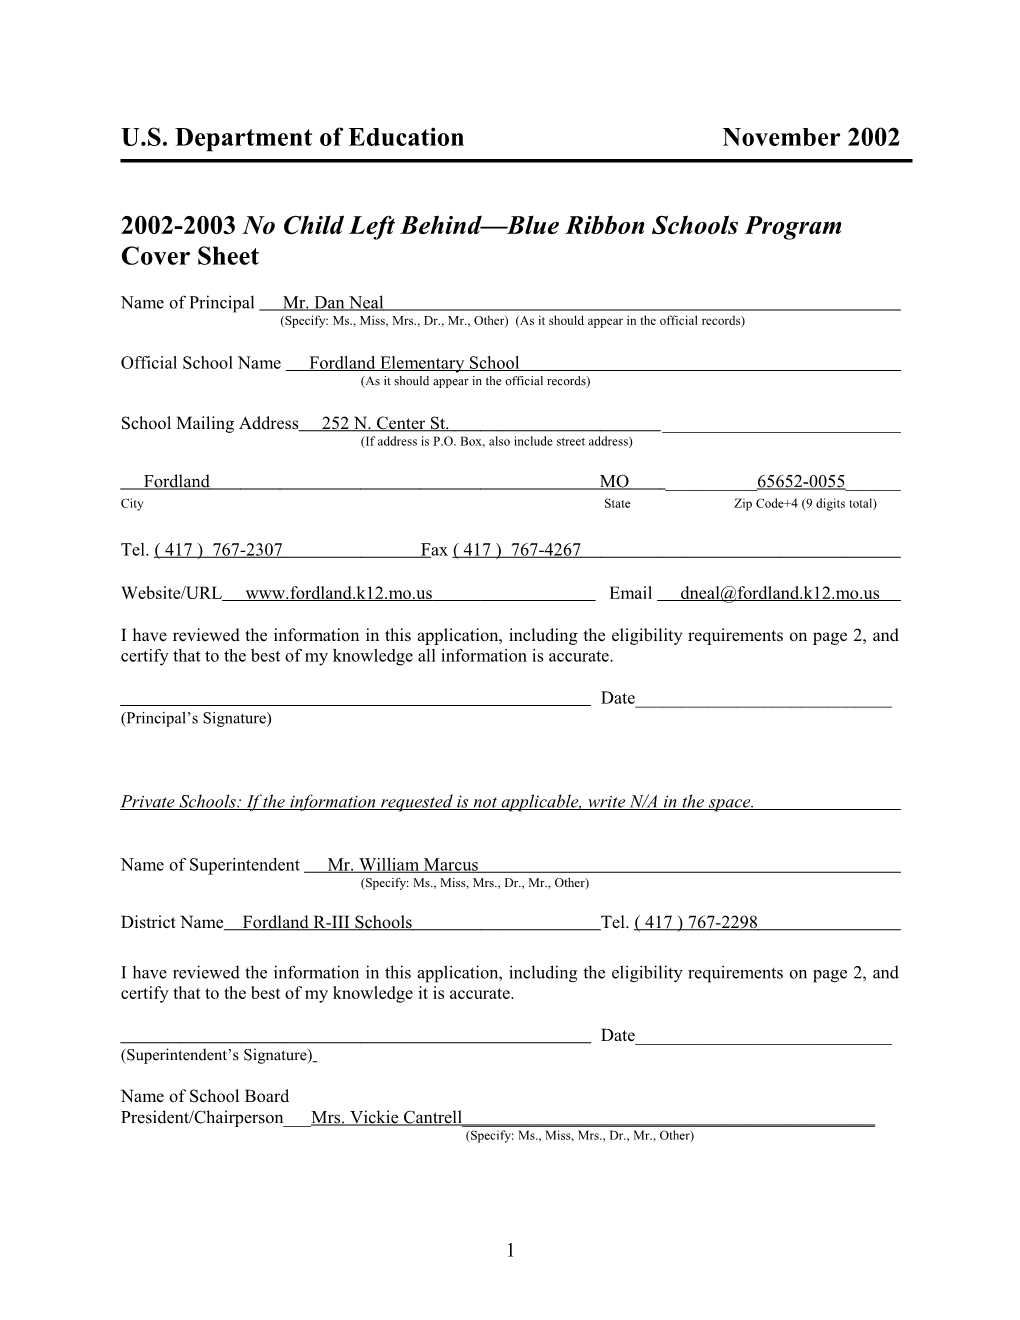 Fordland Elementary School 2003 No Child Left Behind-Blue Ribbon School (Msword)